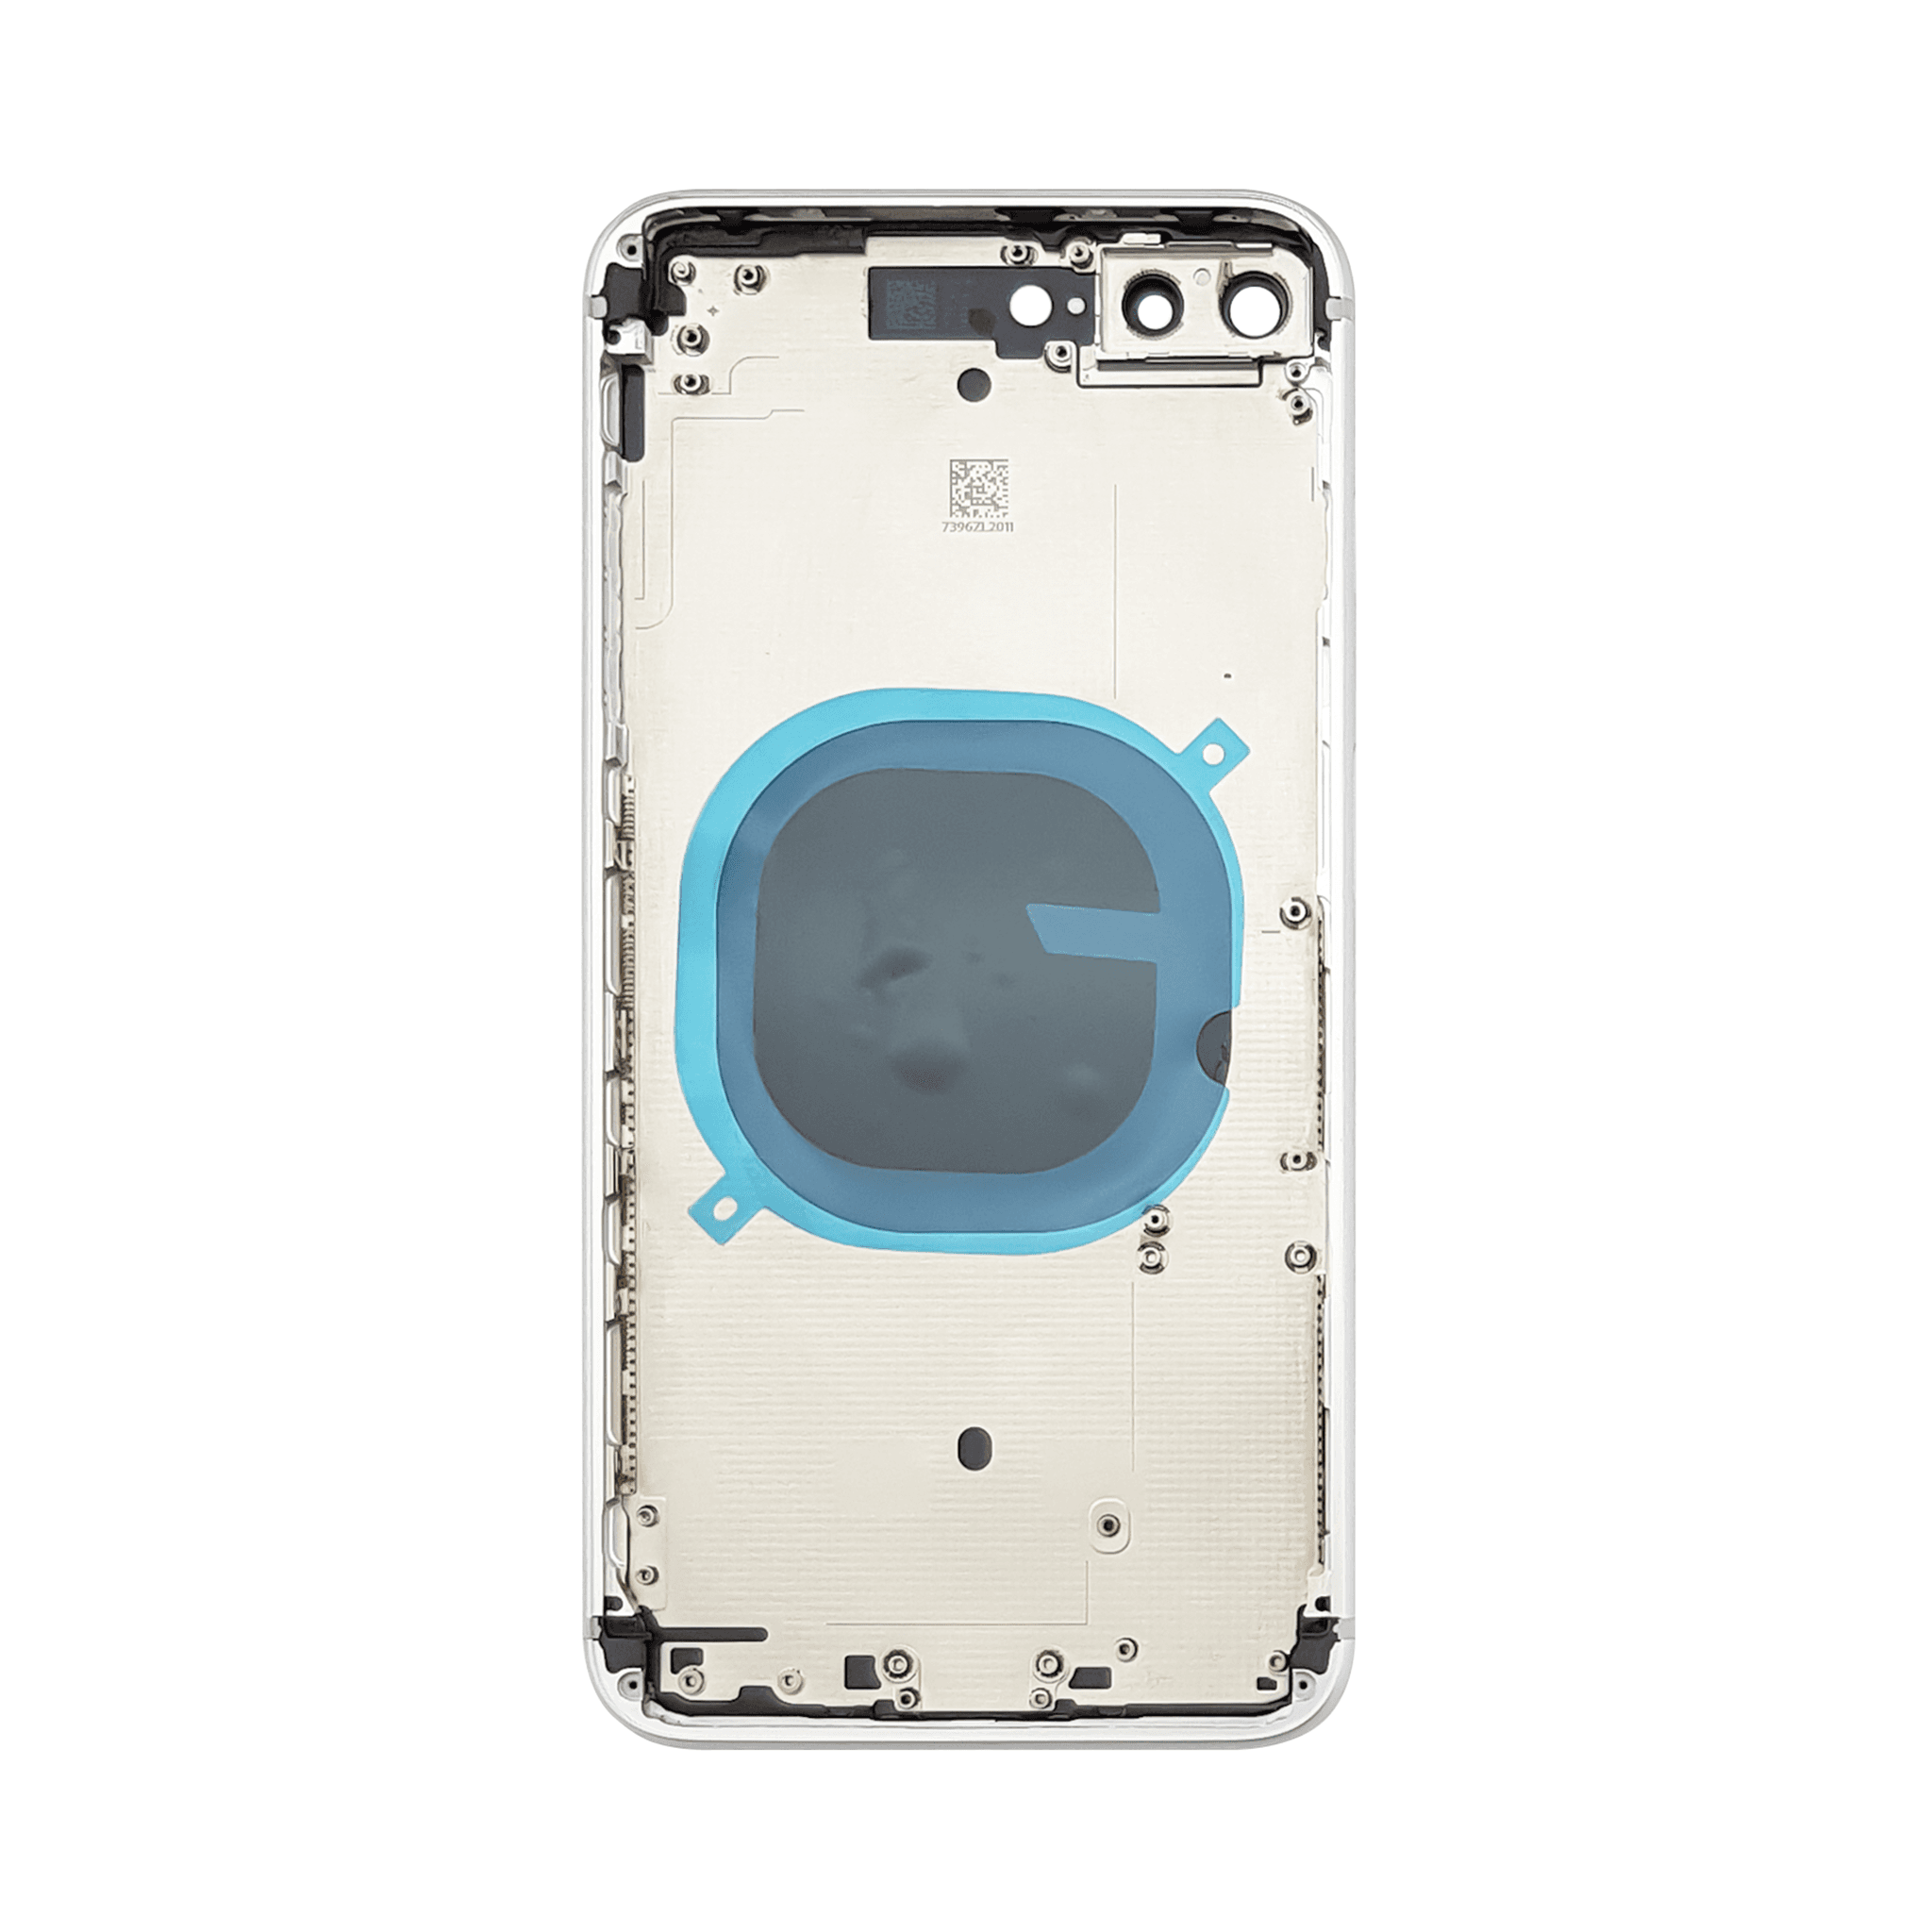 Korpus + kryt baterie iPhone 8 plus bílý